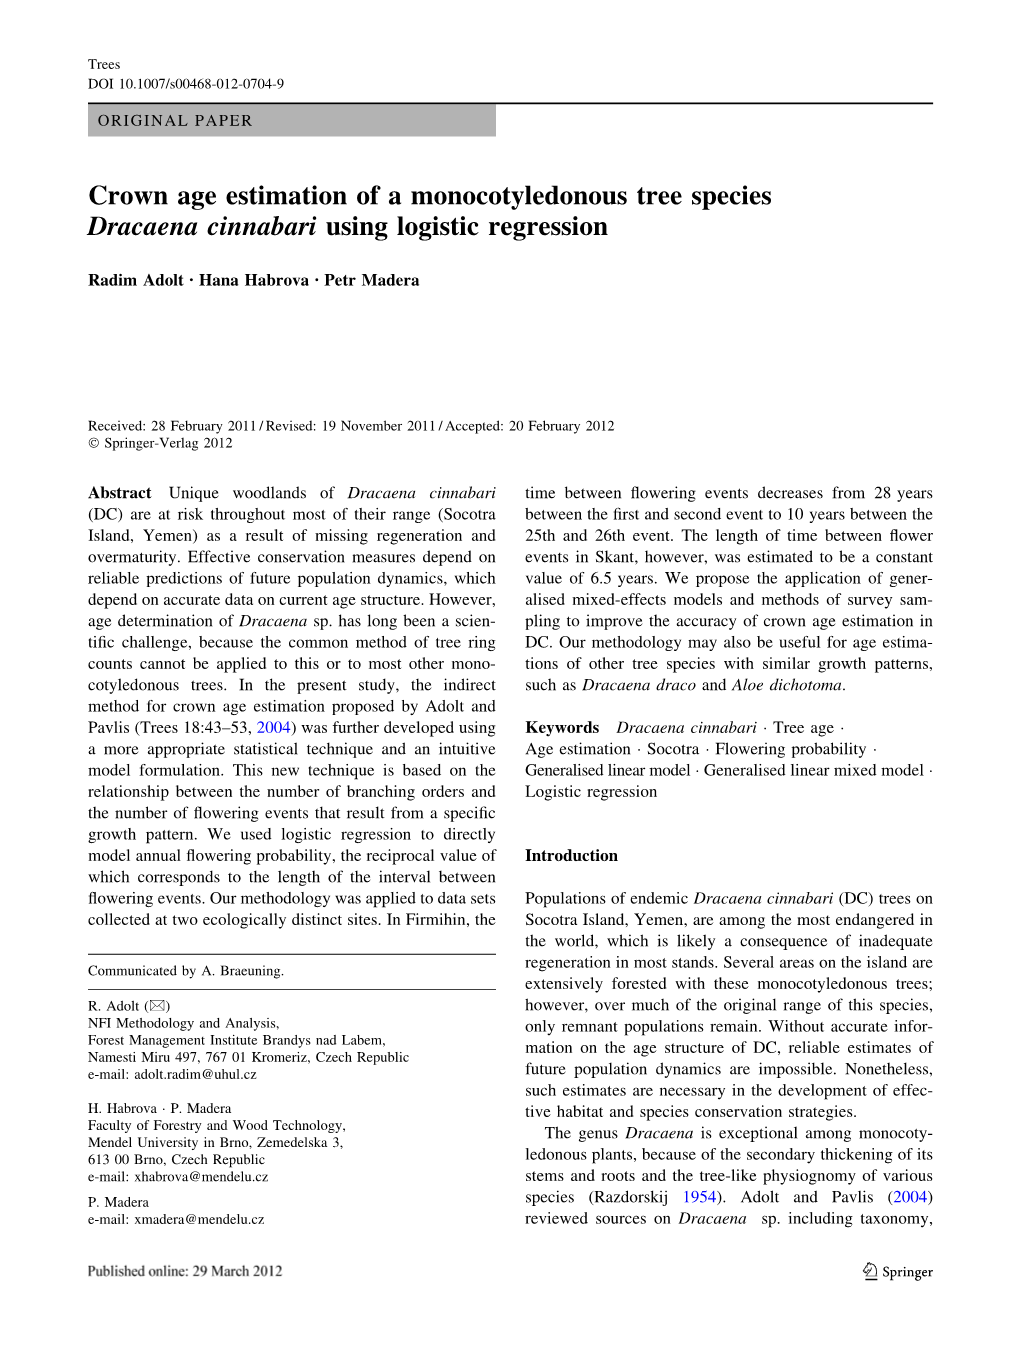 Crown Age Estimation of a Monocotyledonous Tree Species Dracaena Cinnabari Using Logistic Regression